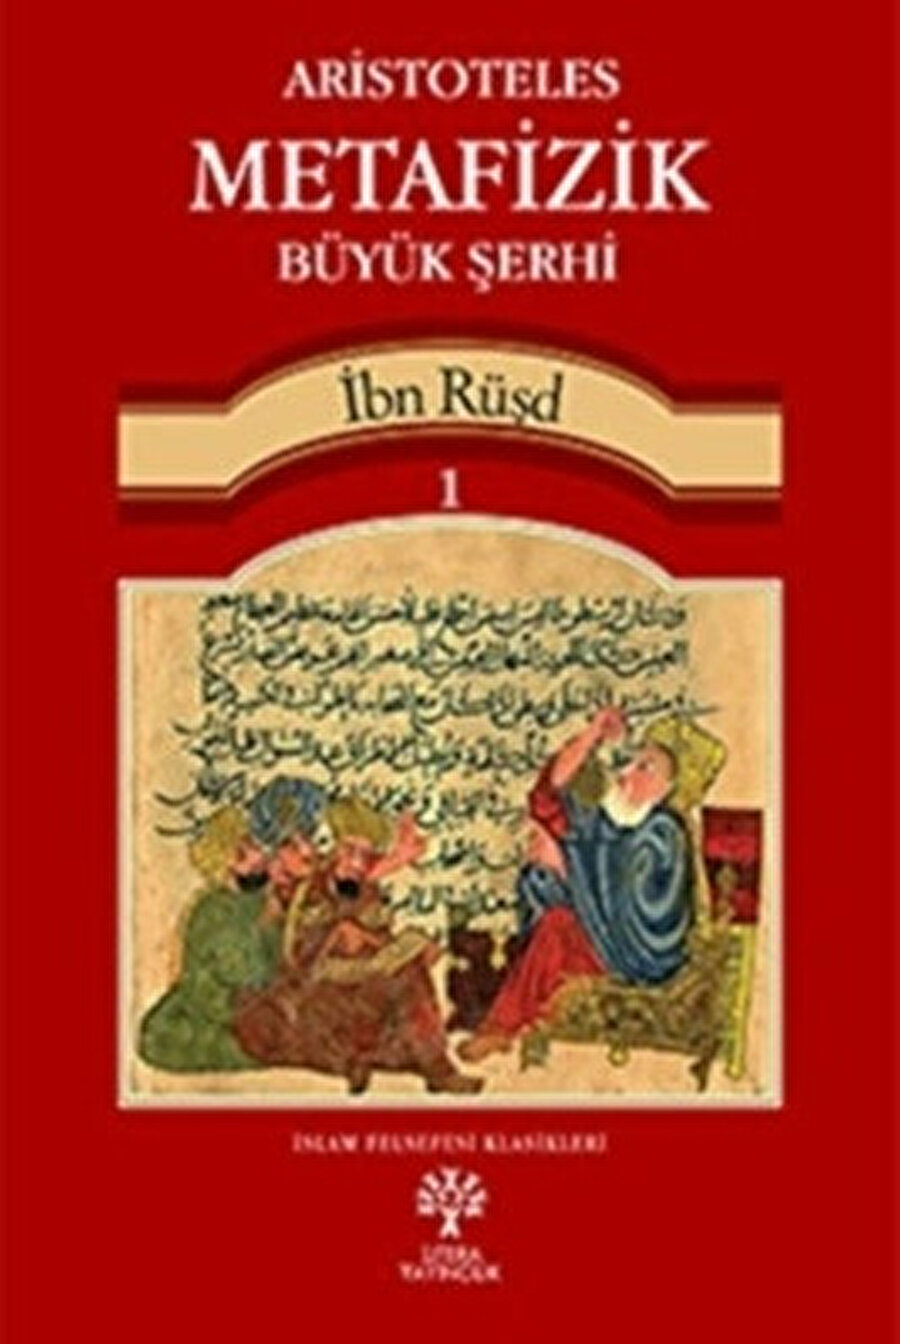 Metafizik Büyük Şerhi, İbn Rüşd, çev. Muhittin Macit, 2 cilt, Litera, 2017